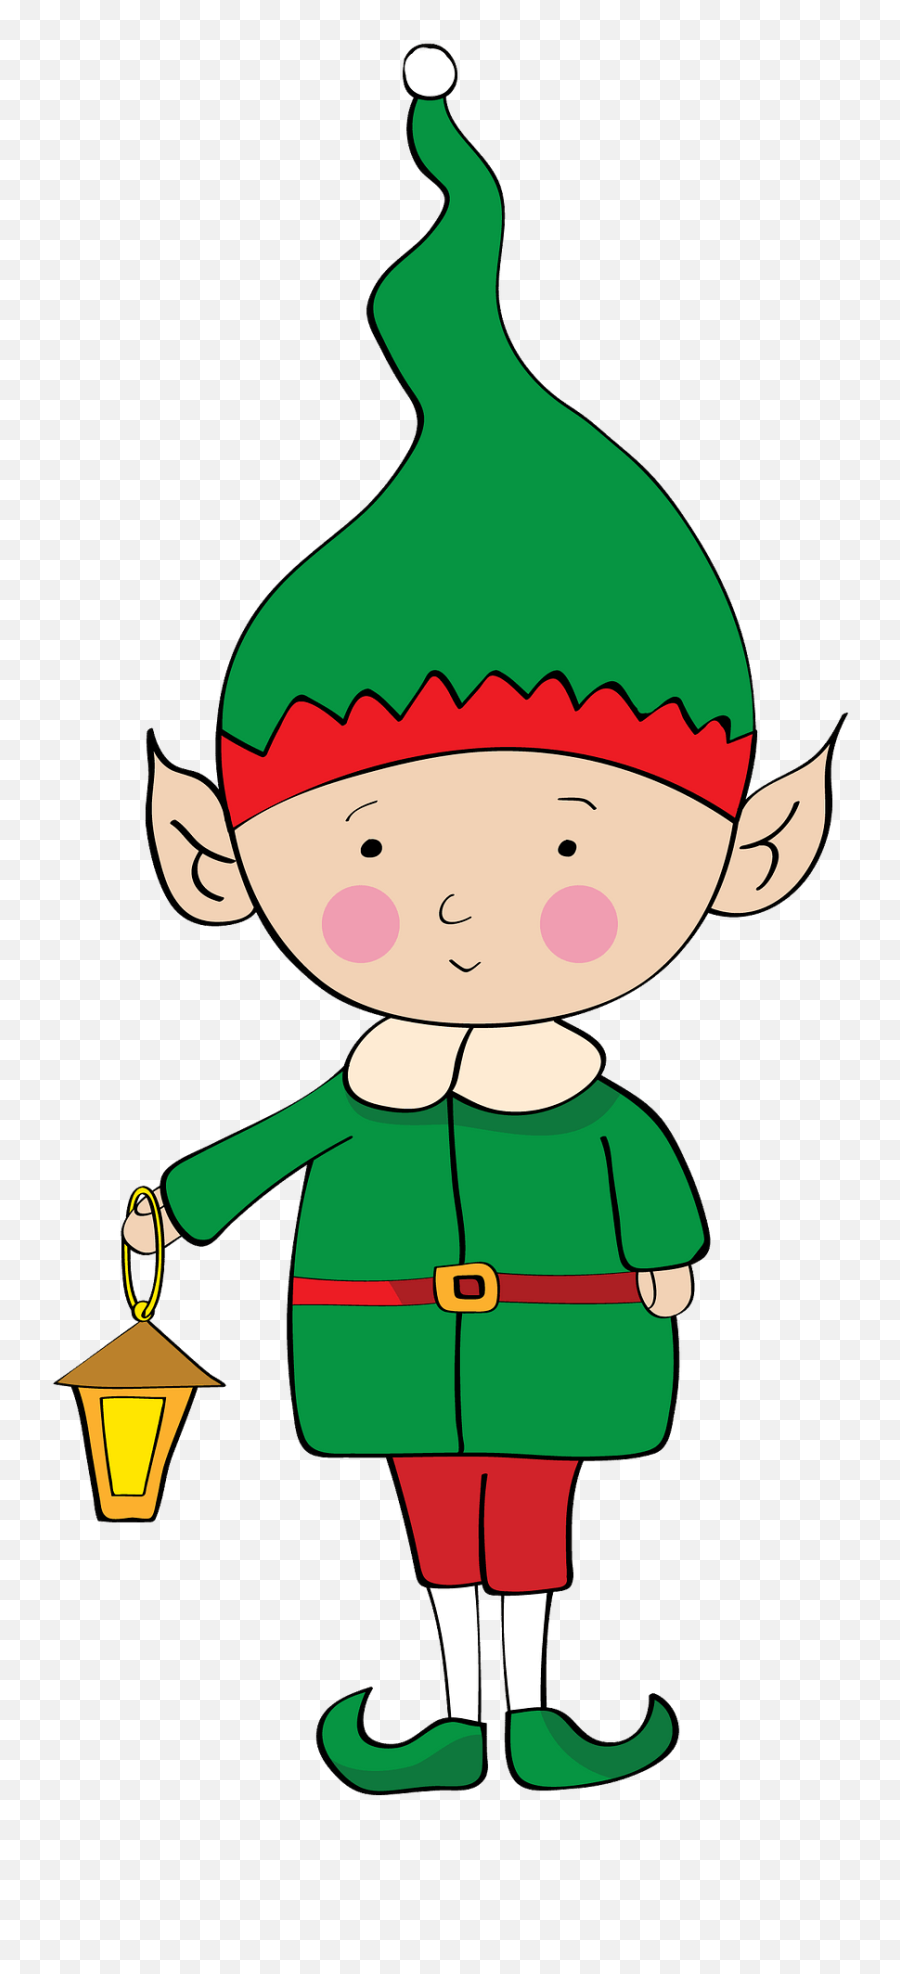 Chrismas Elf With A Lantern Clipart Free Download - Christmas Elf Emoji,Elf On The Shelf Clipart